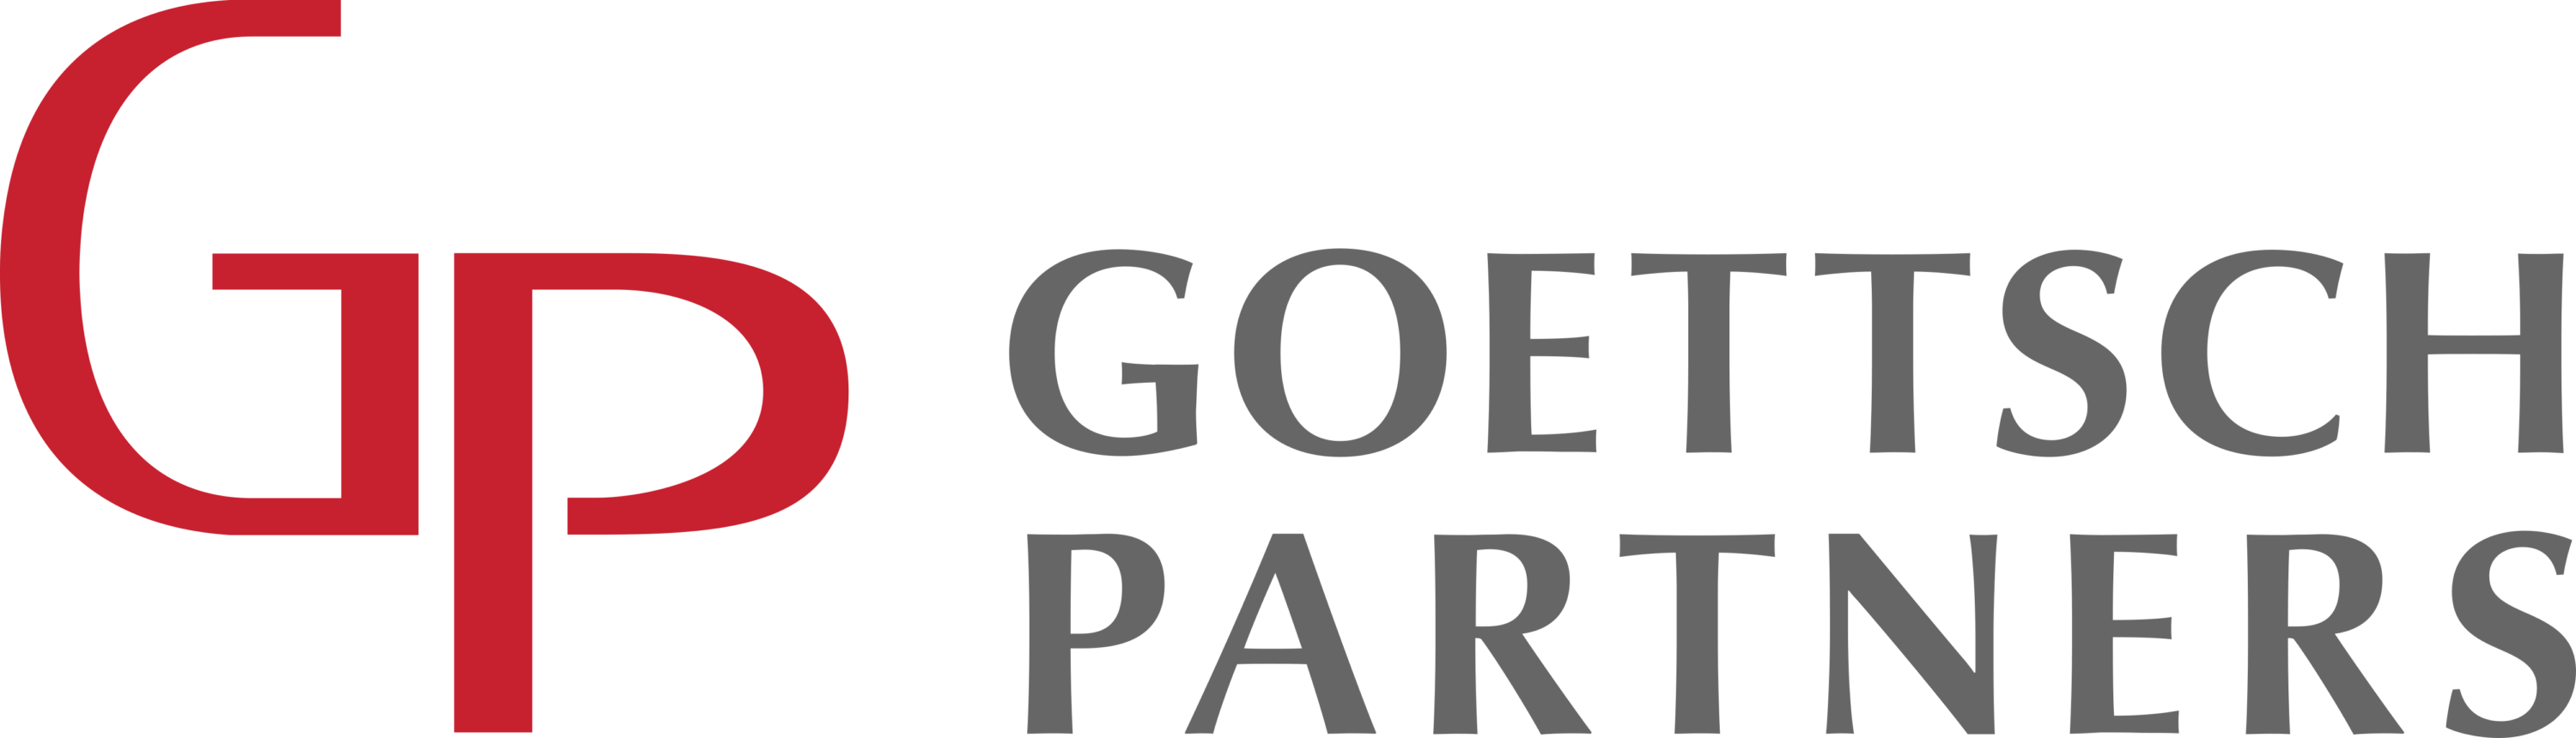 Goettsch Partners Logo